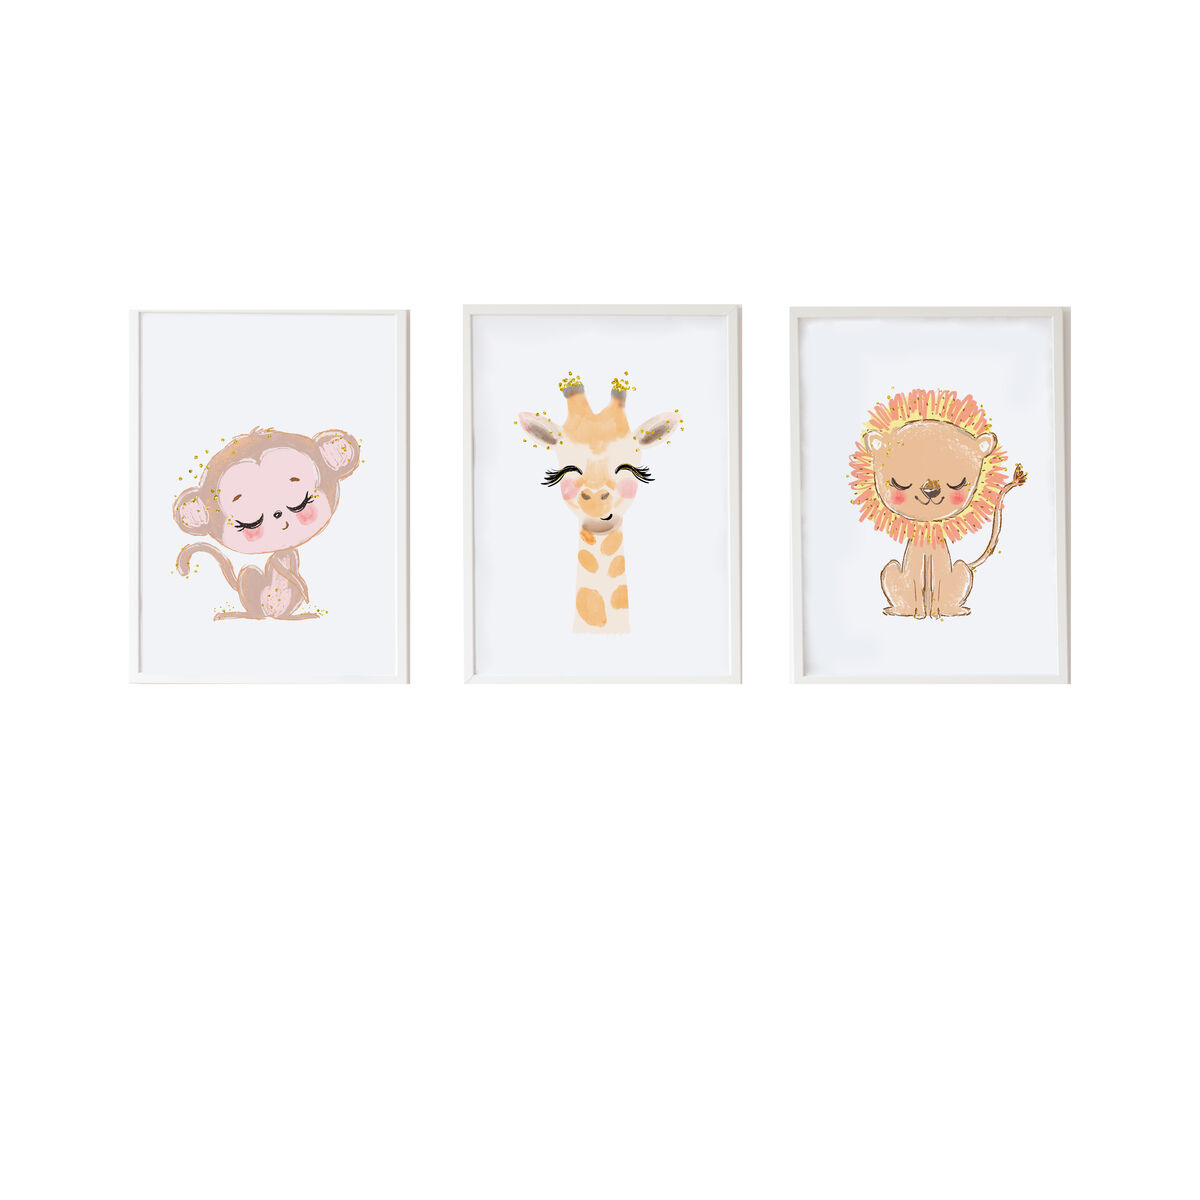 Sheets Crochetts 33 x 43 x 2 cm Lion Monkey Giraffe 3 Pieces